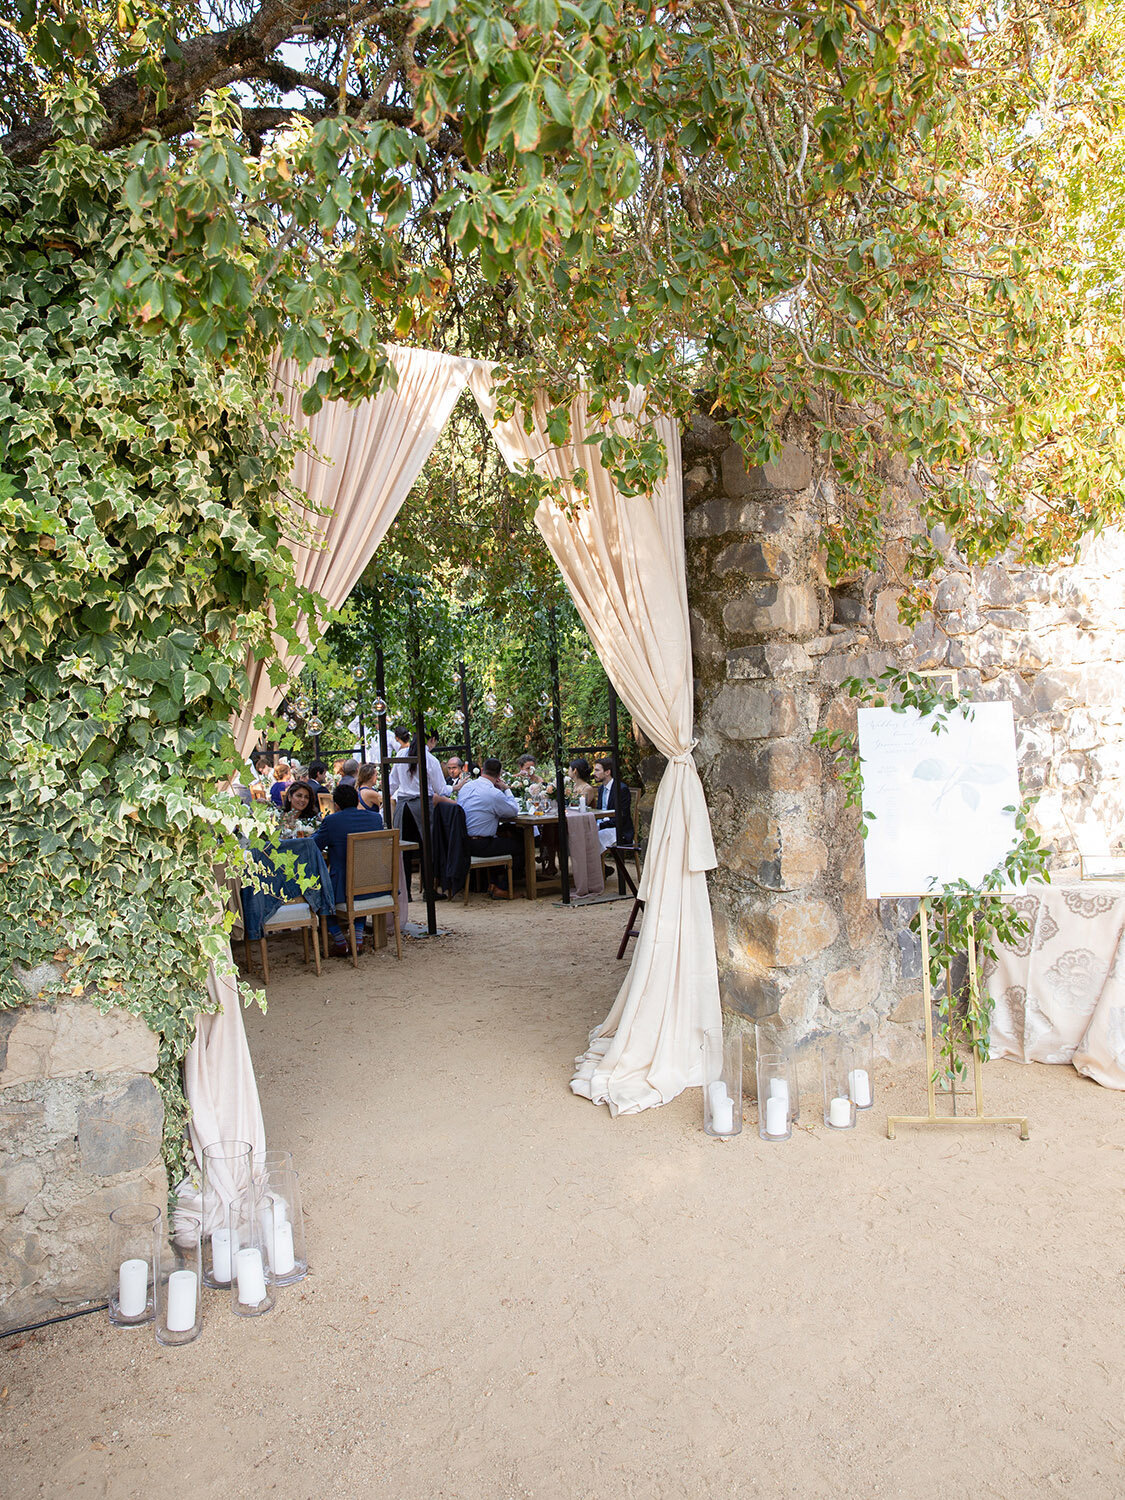 annadel-estate-elegant-sonoma-winery-wedding-reception-entrance-curtains-tie-back-candles